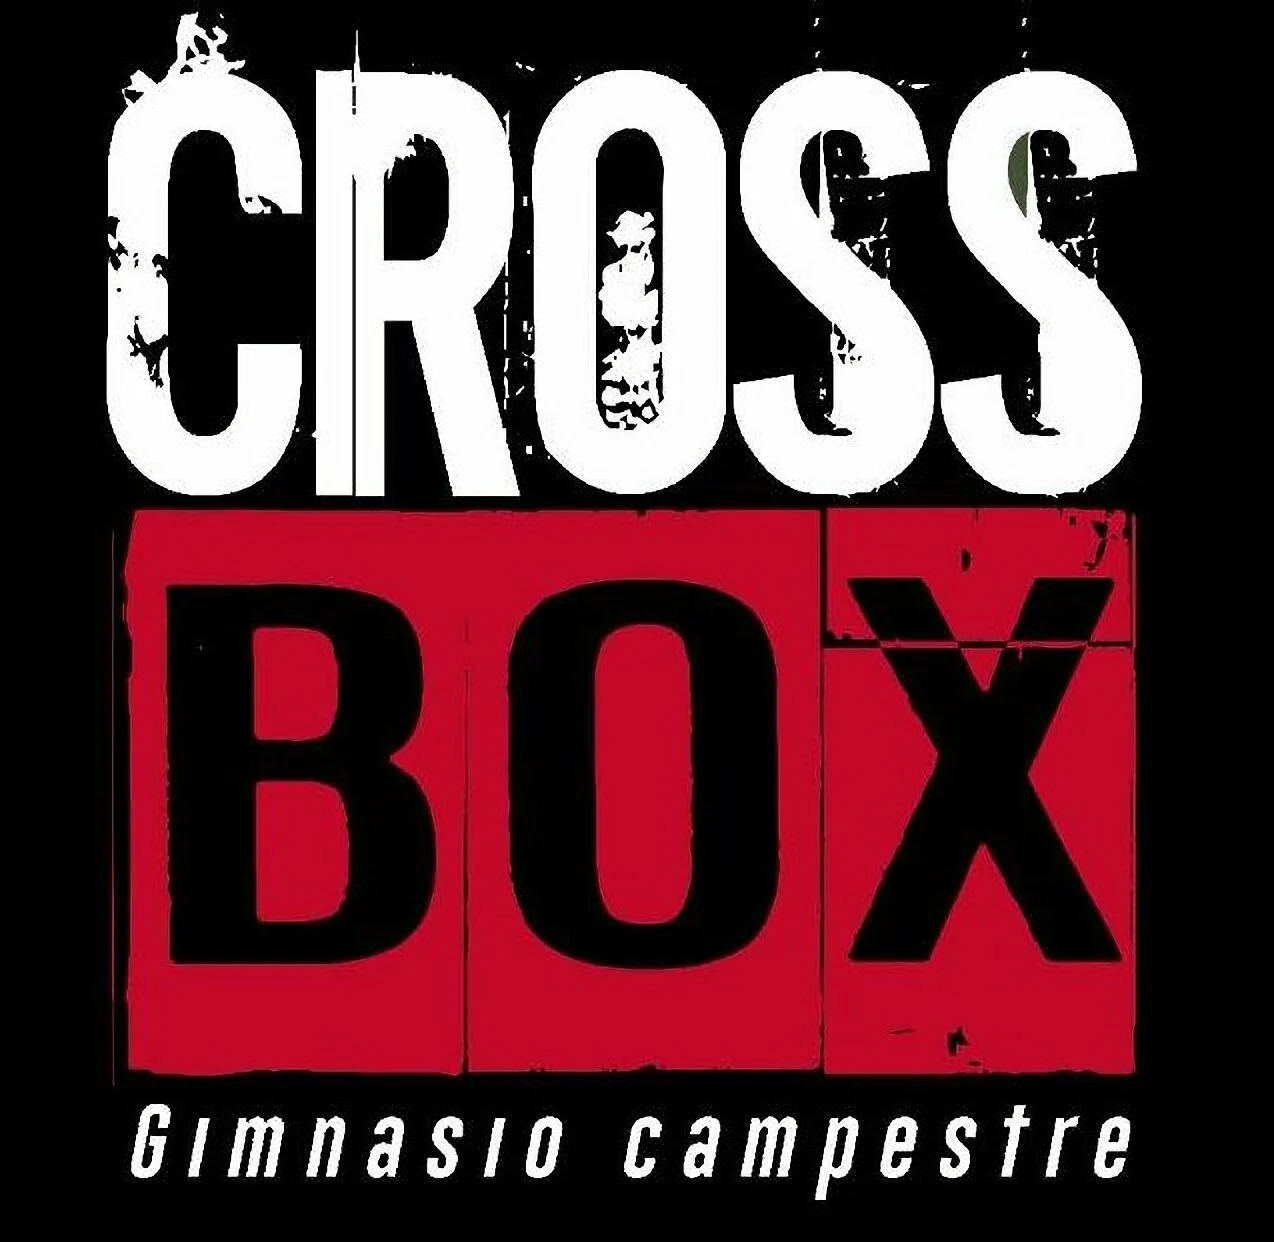 CROSS BOX Gimnasio Campestre-1679